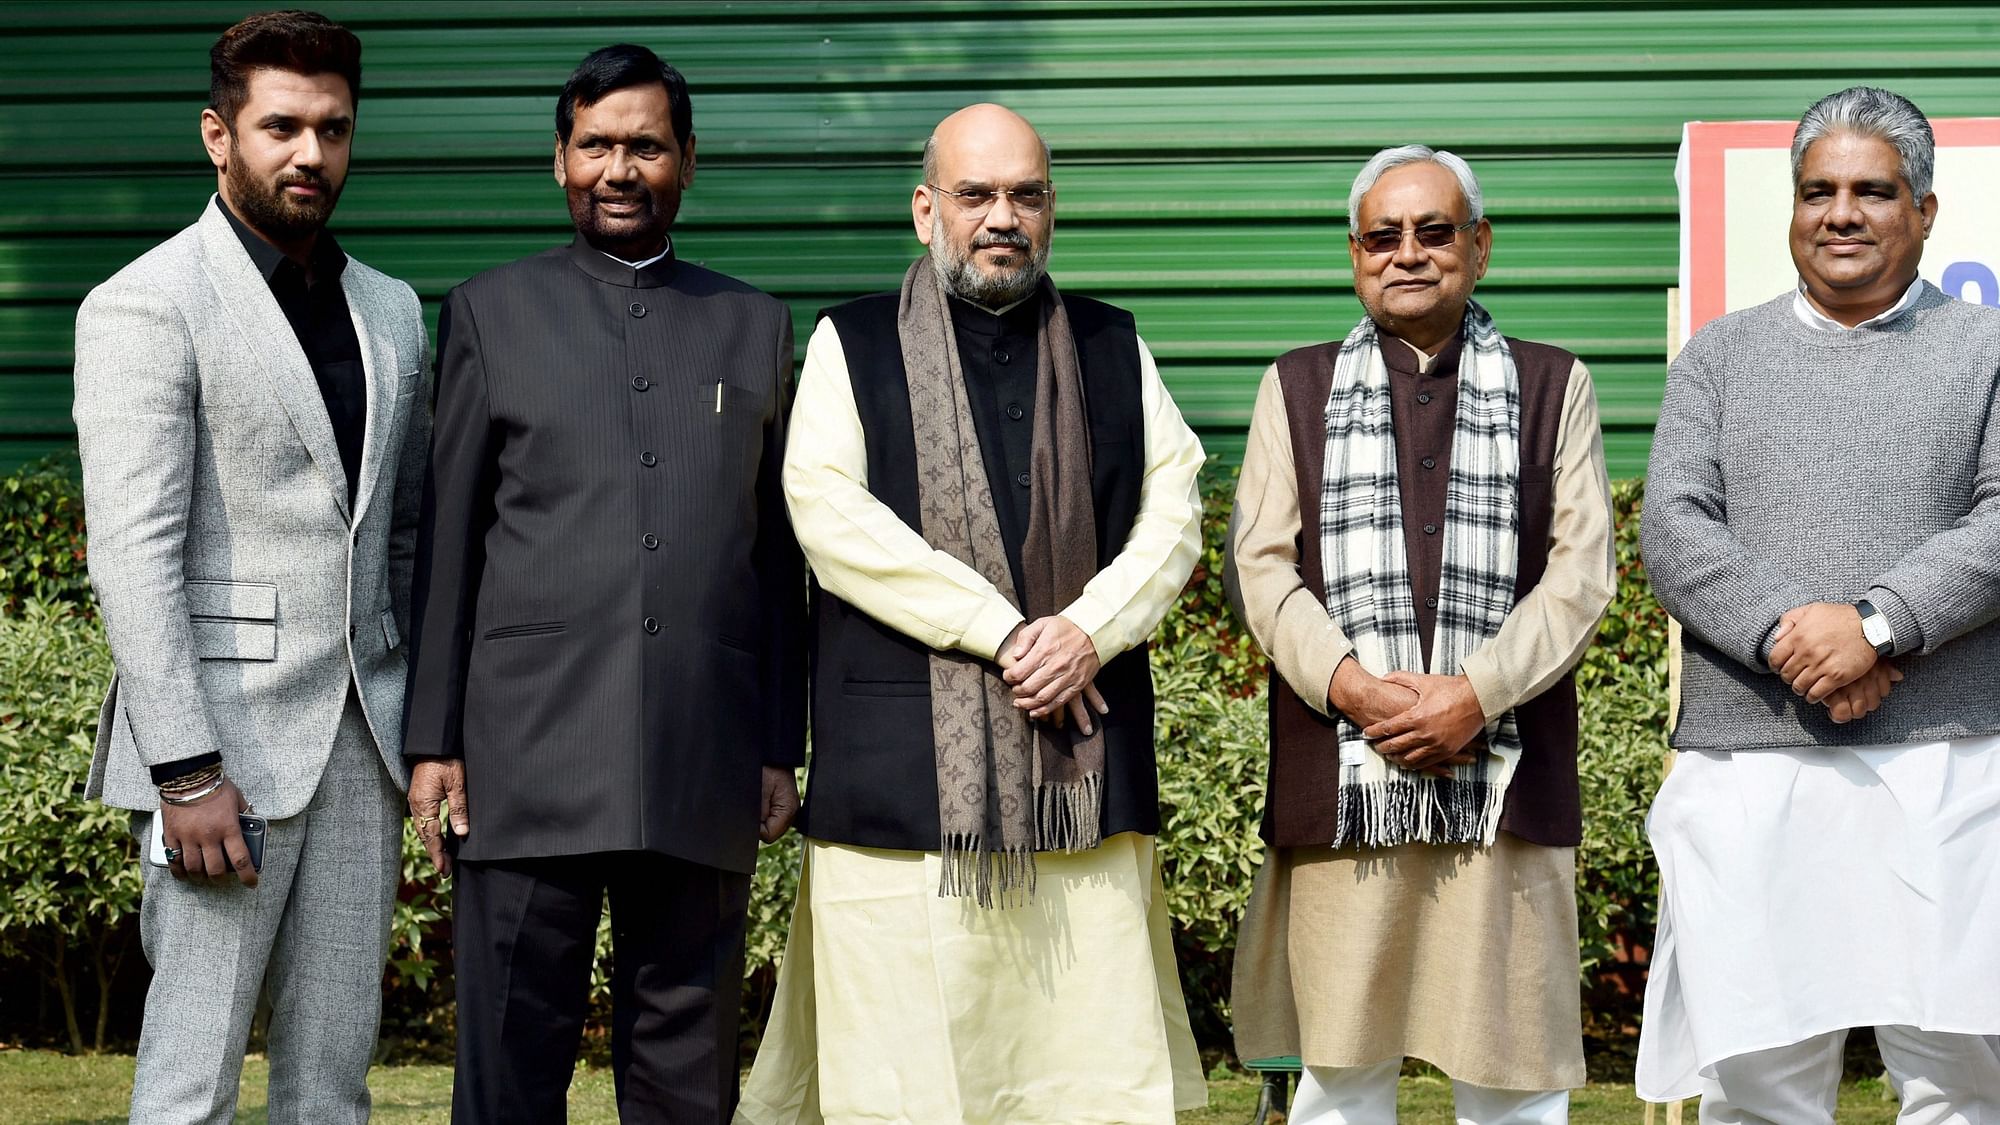 BJP President Amit Shah flanked by JD(U) Chief and Bihar CM Nitish Kumar, LJP President Ram Vilas Paswan, his son Chirag Paswan and BJP leader Bhupendra Yadav on 23 December.